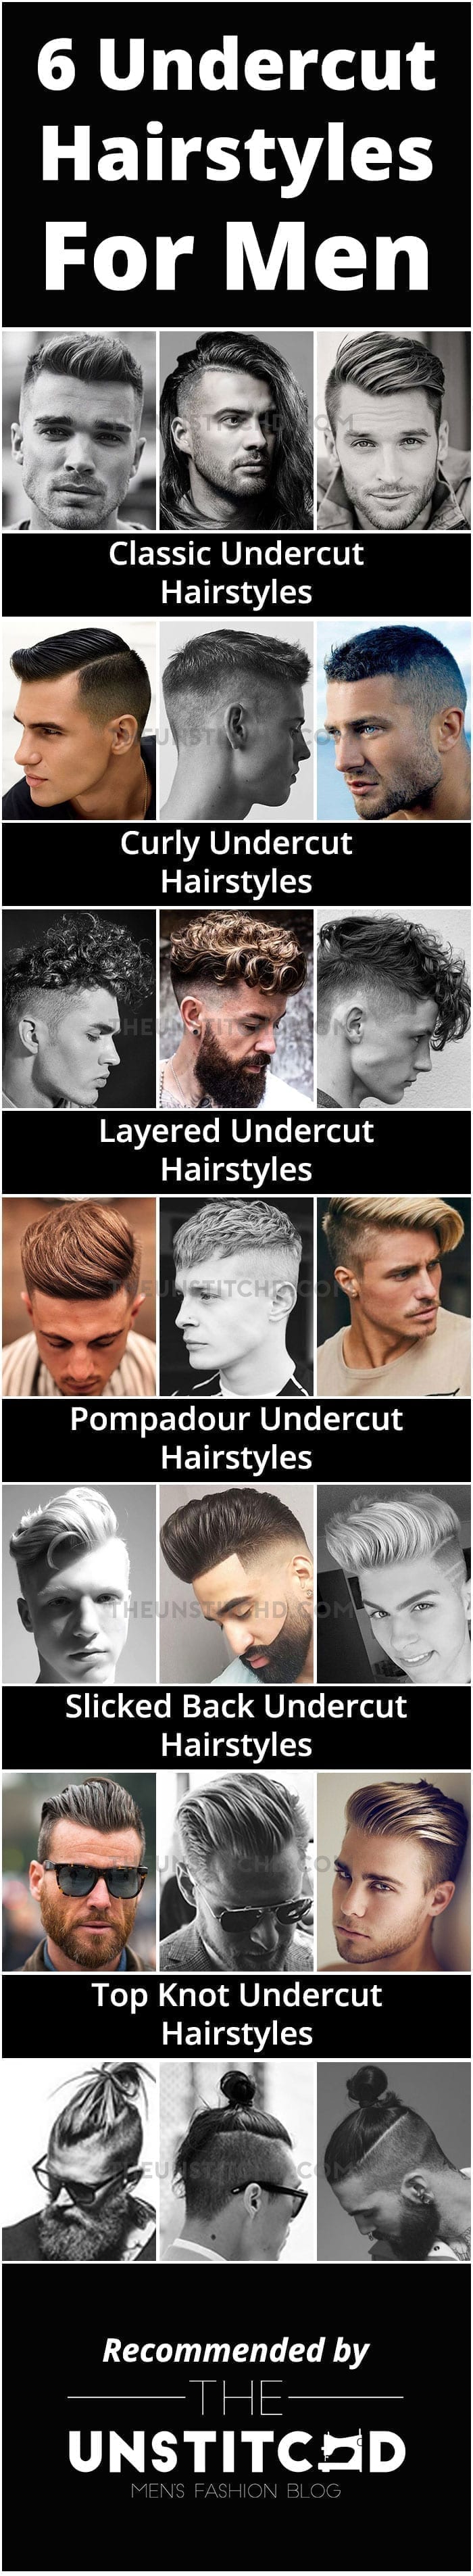 Undercut-Hairstyle